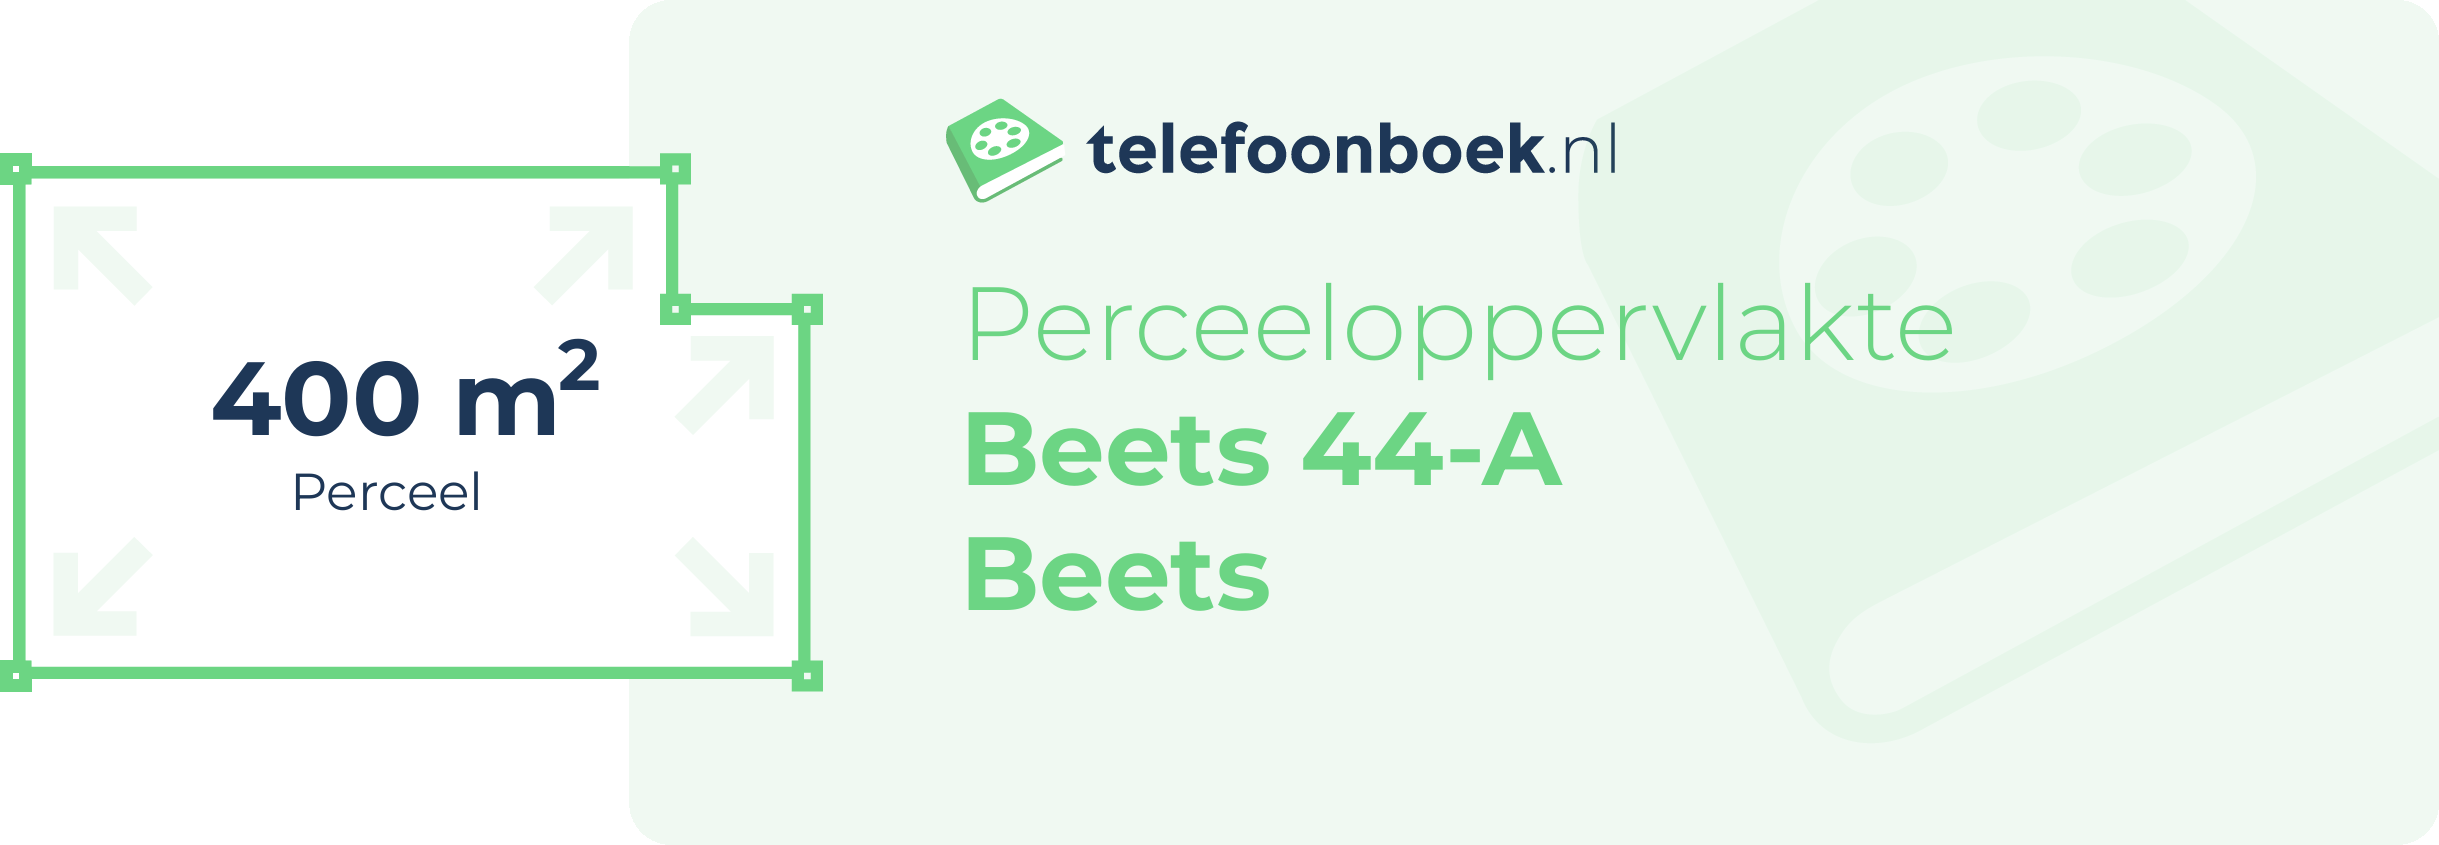 Perceeloppervlakte Beets 44-A Beets